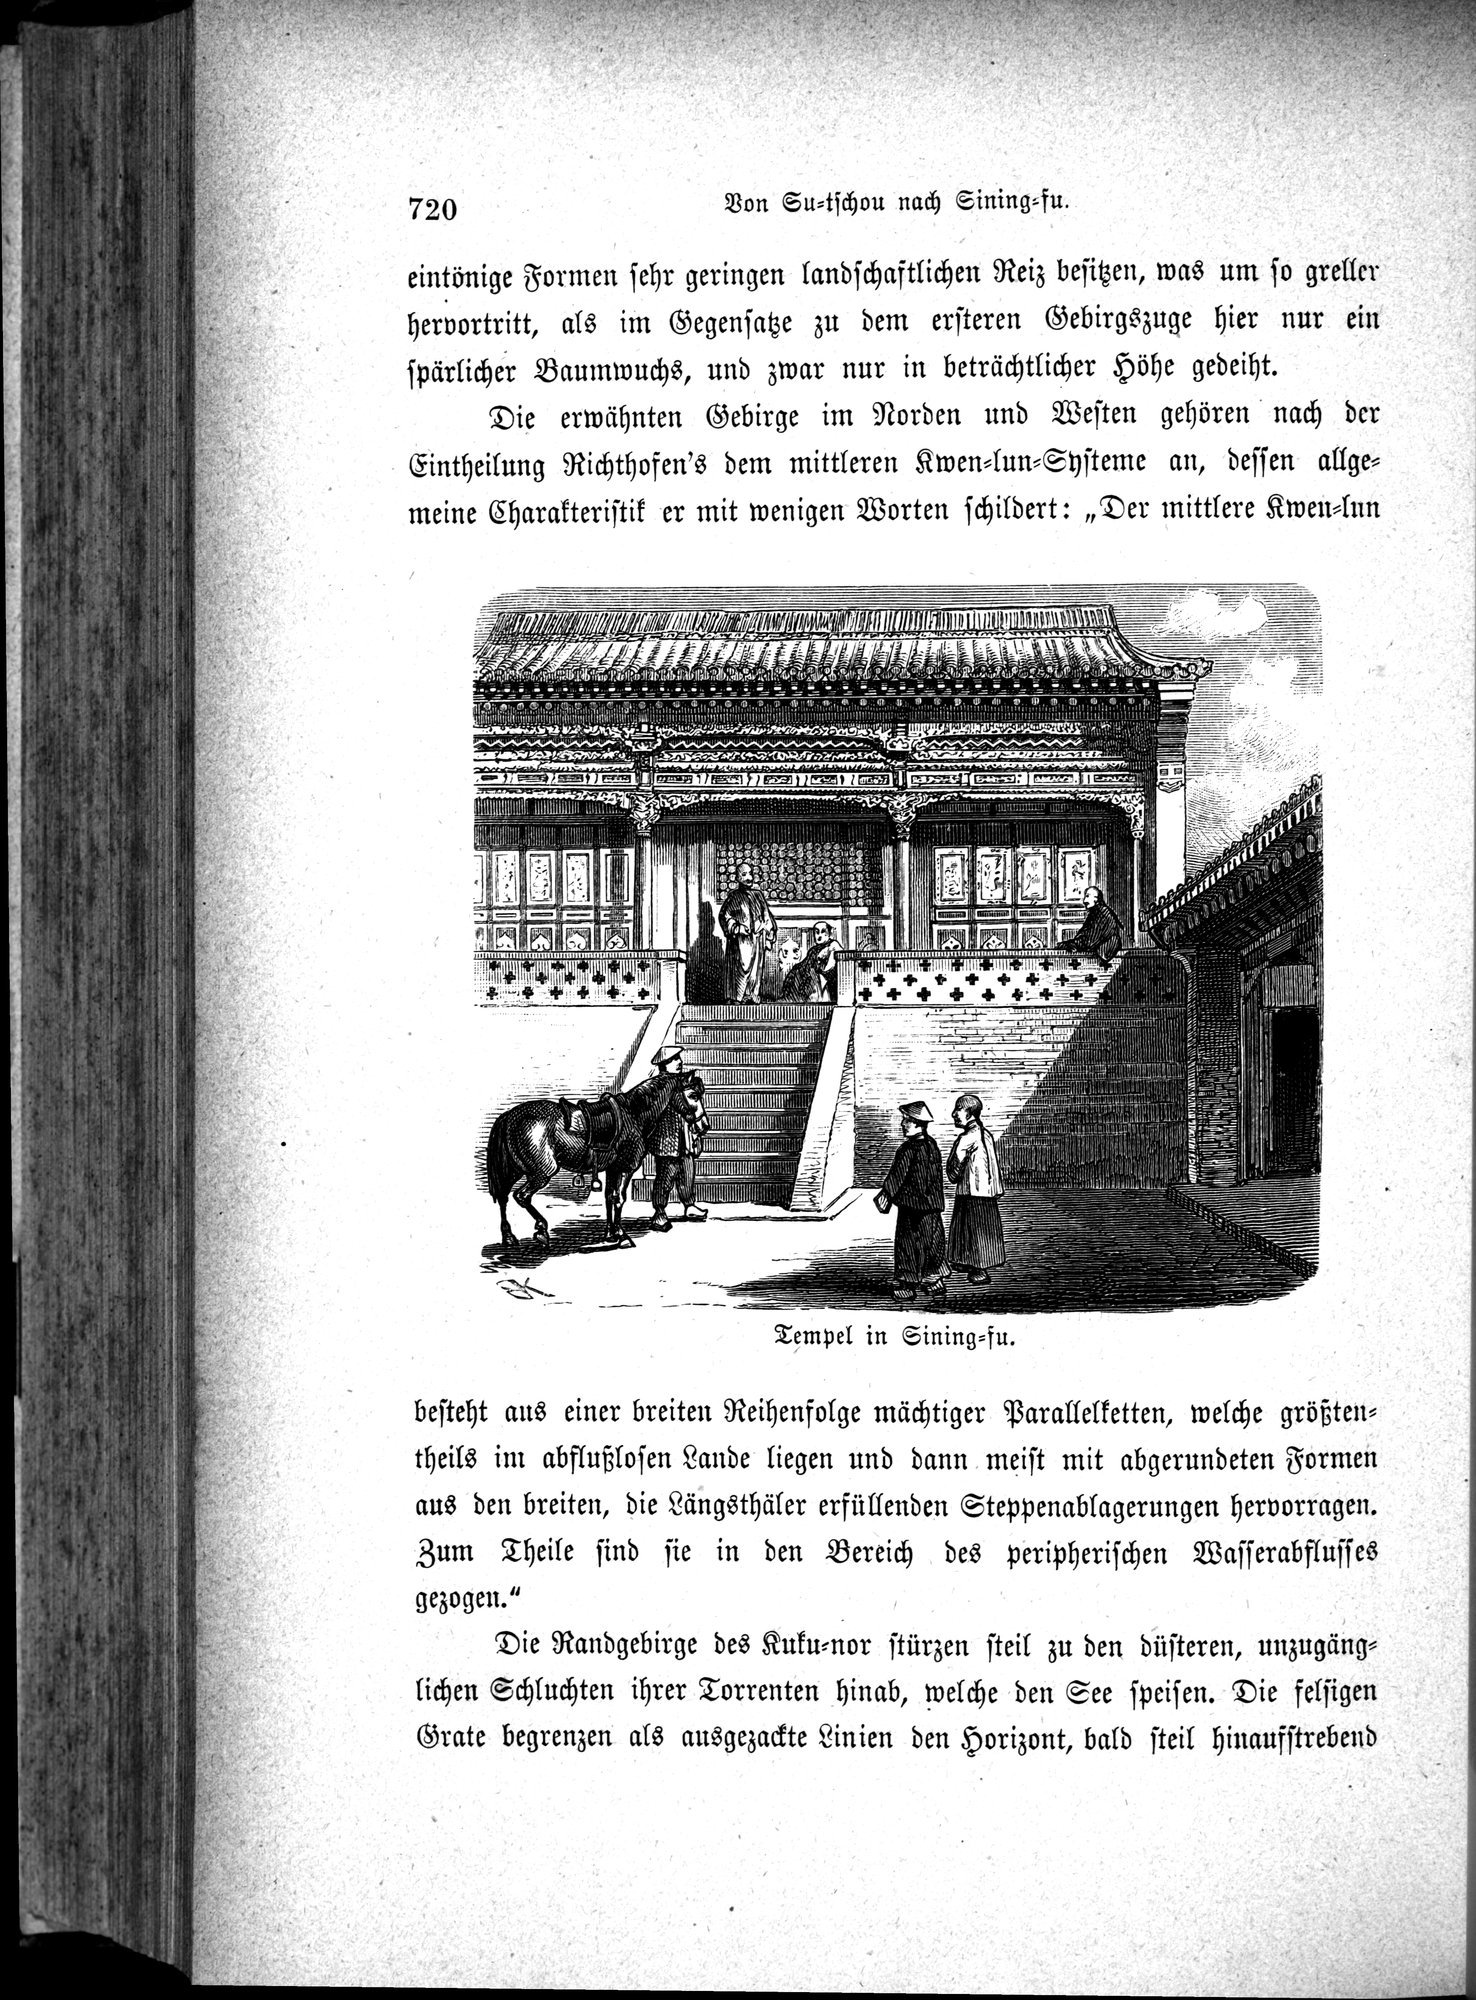 Im fernen Osten : vol.1 / Page 744 (Grayscale High Resolution Image)